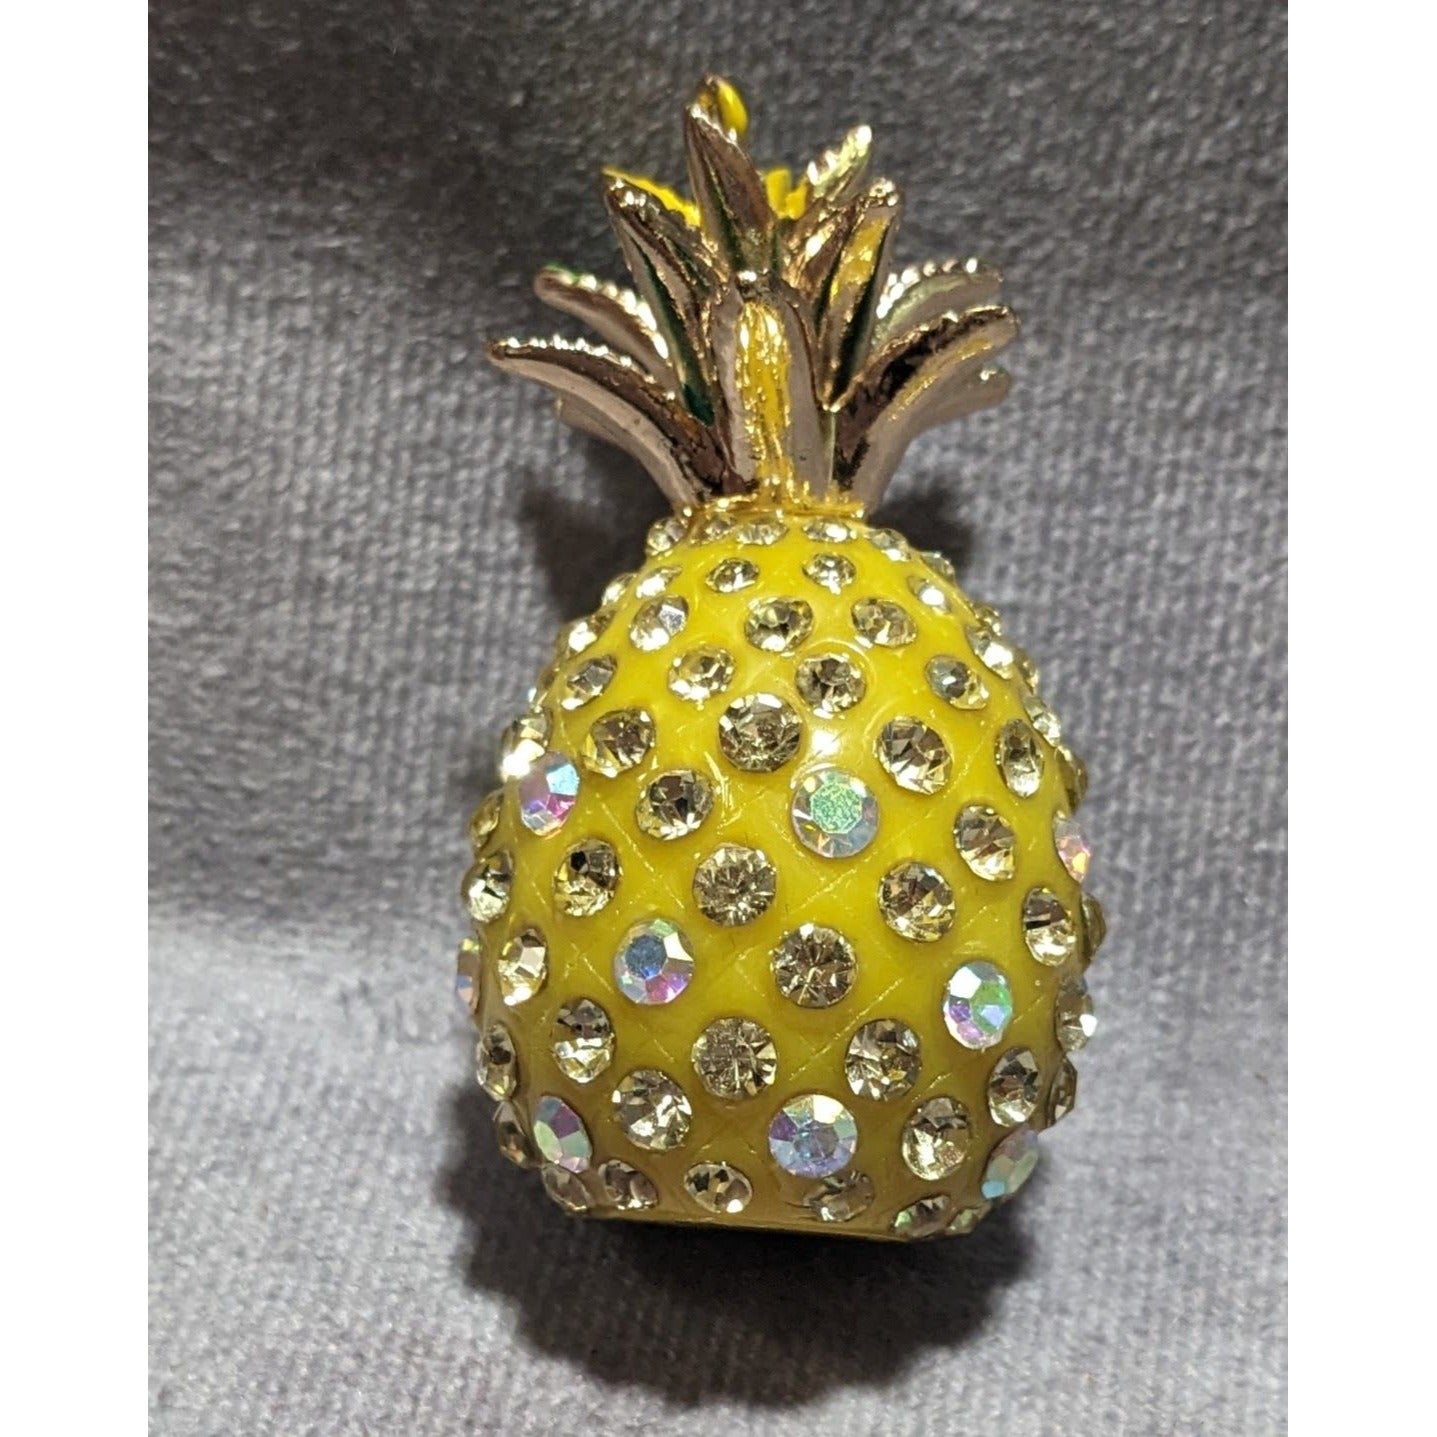 Rhinestone Glam Pineapple Pendant